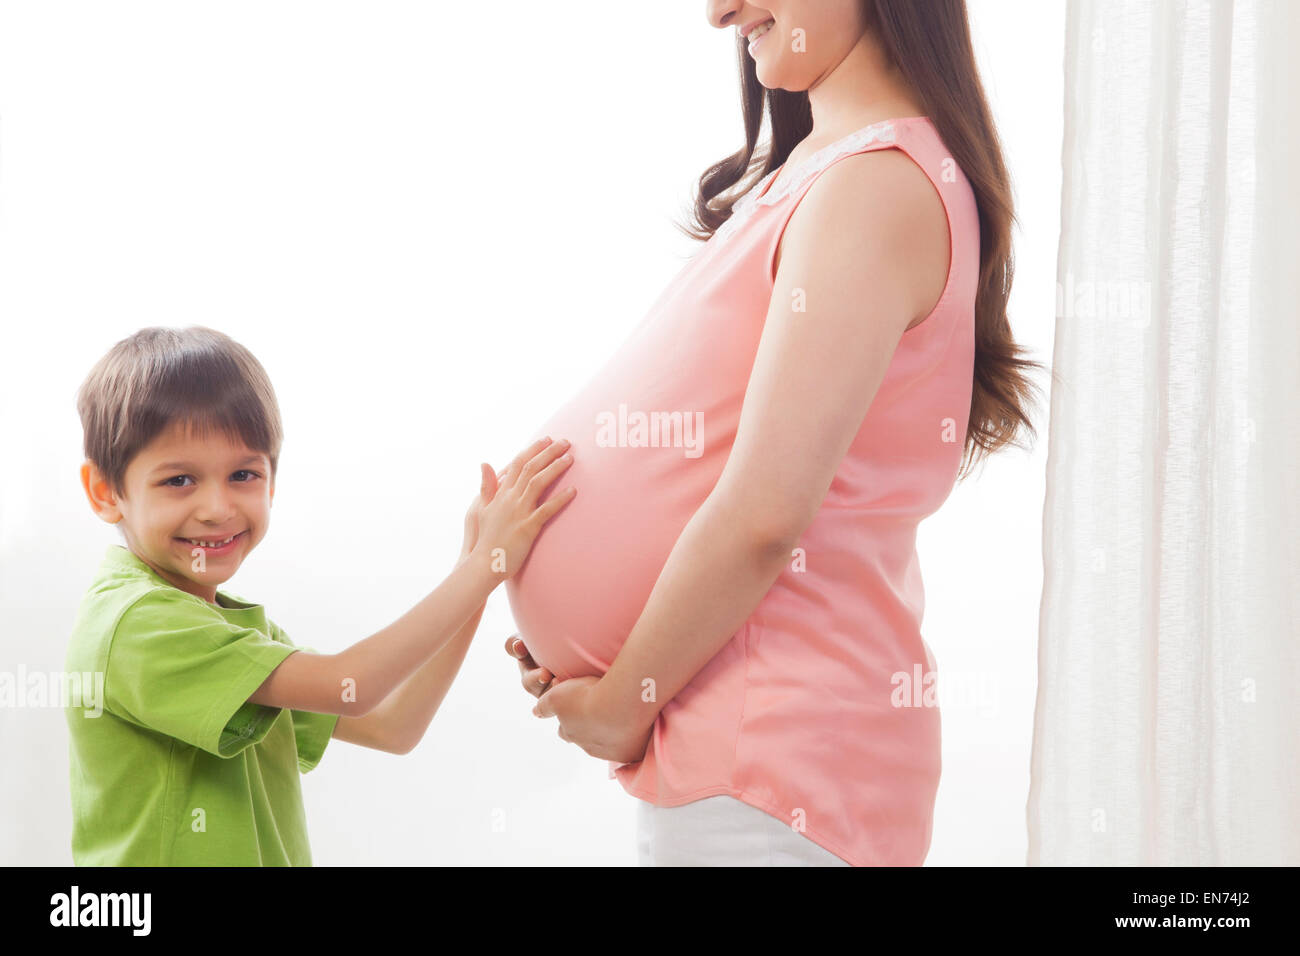 Porträt eines jungen Mutter schwangeren Bauch zu berühren Stockfoto